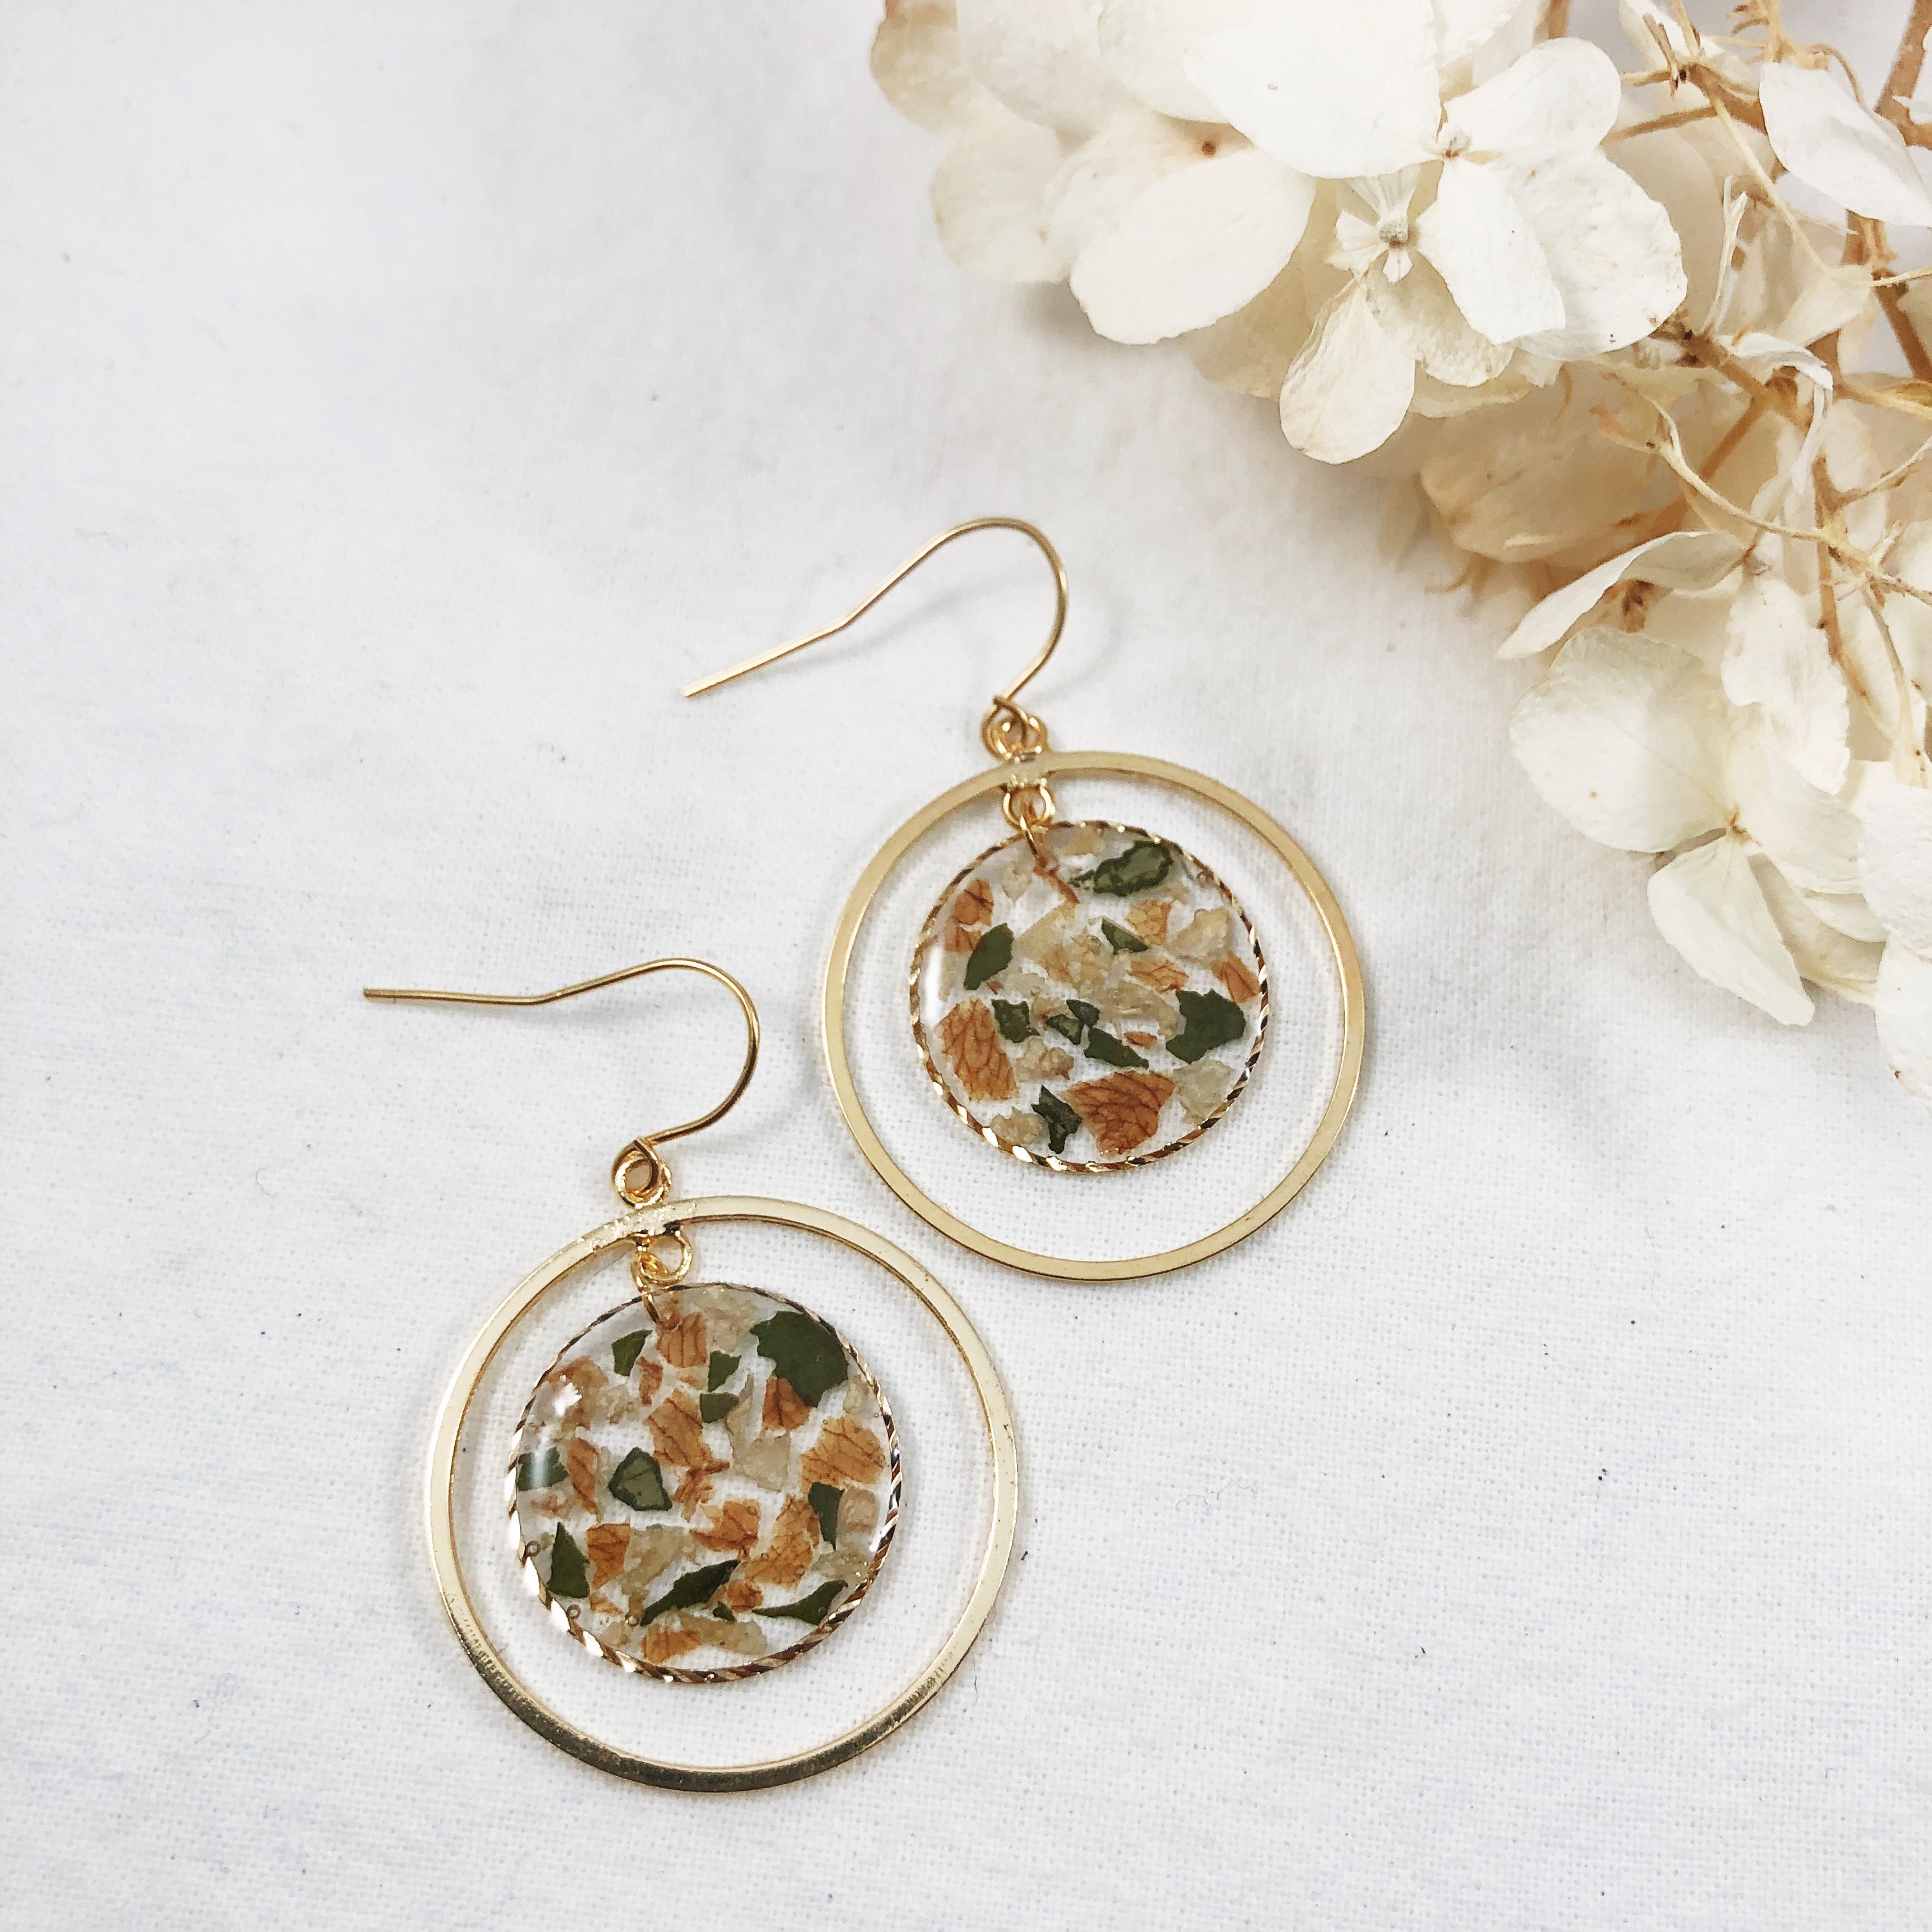 Get Preserved Flower Stone Flower Drop Earrings at ₹ 800 | LBB Shop